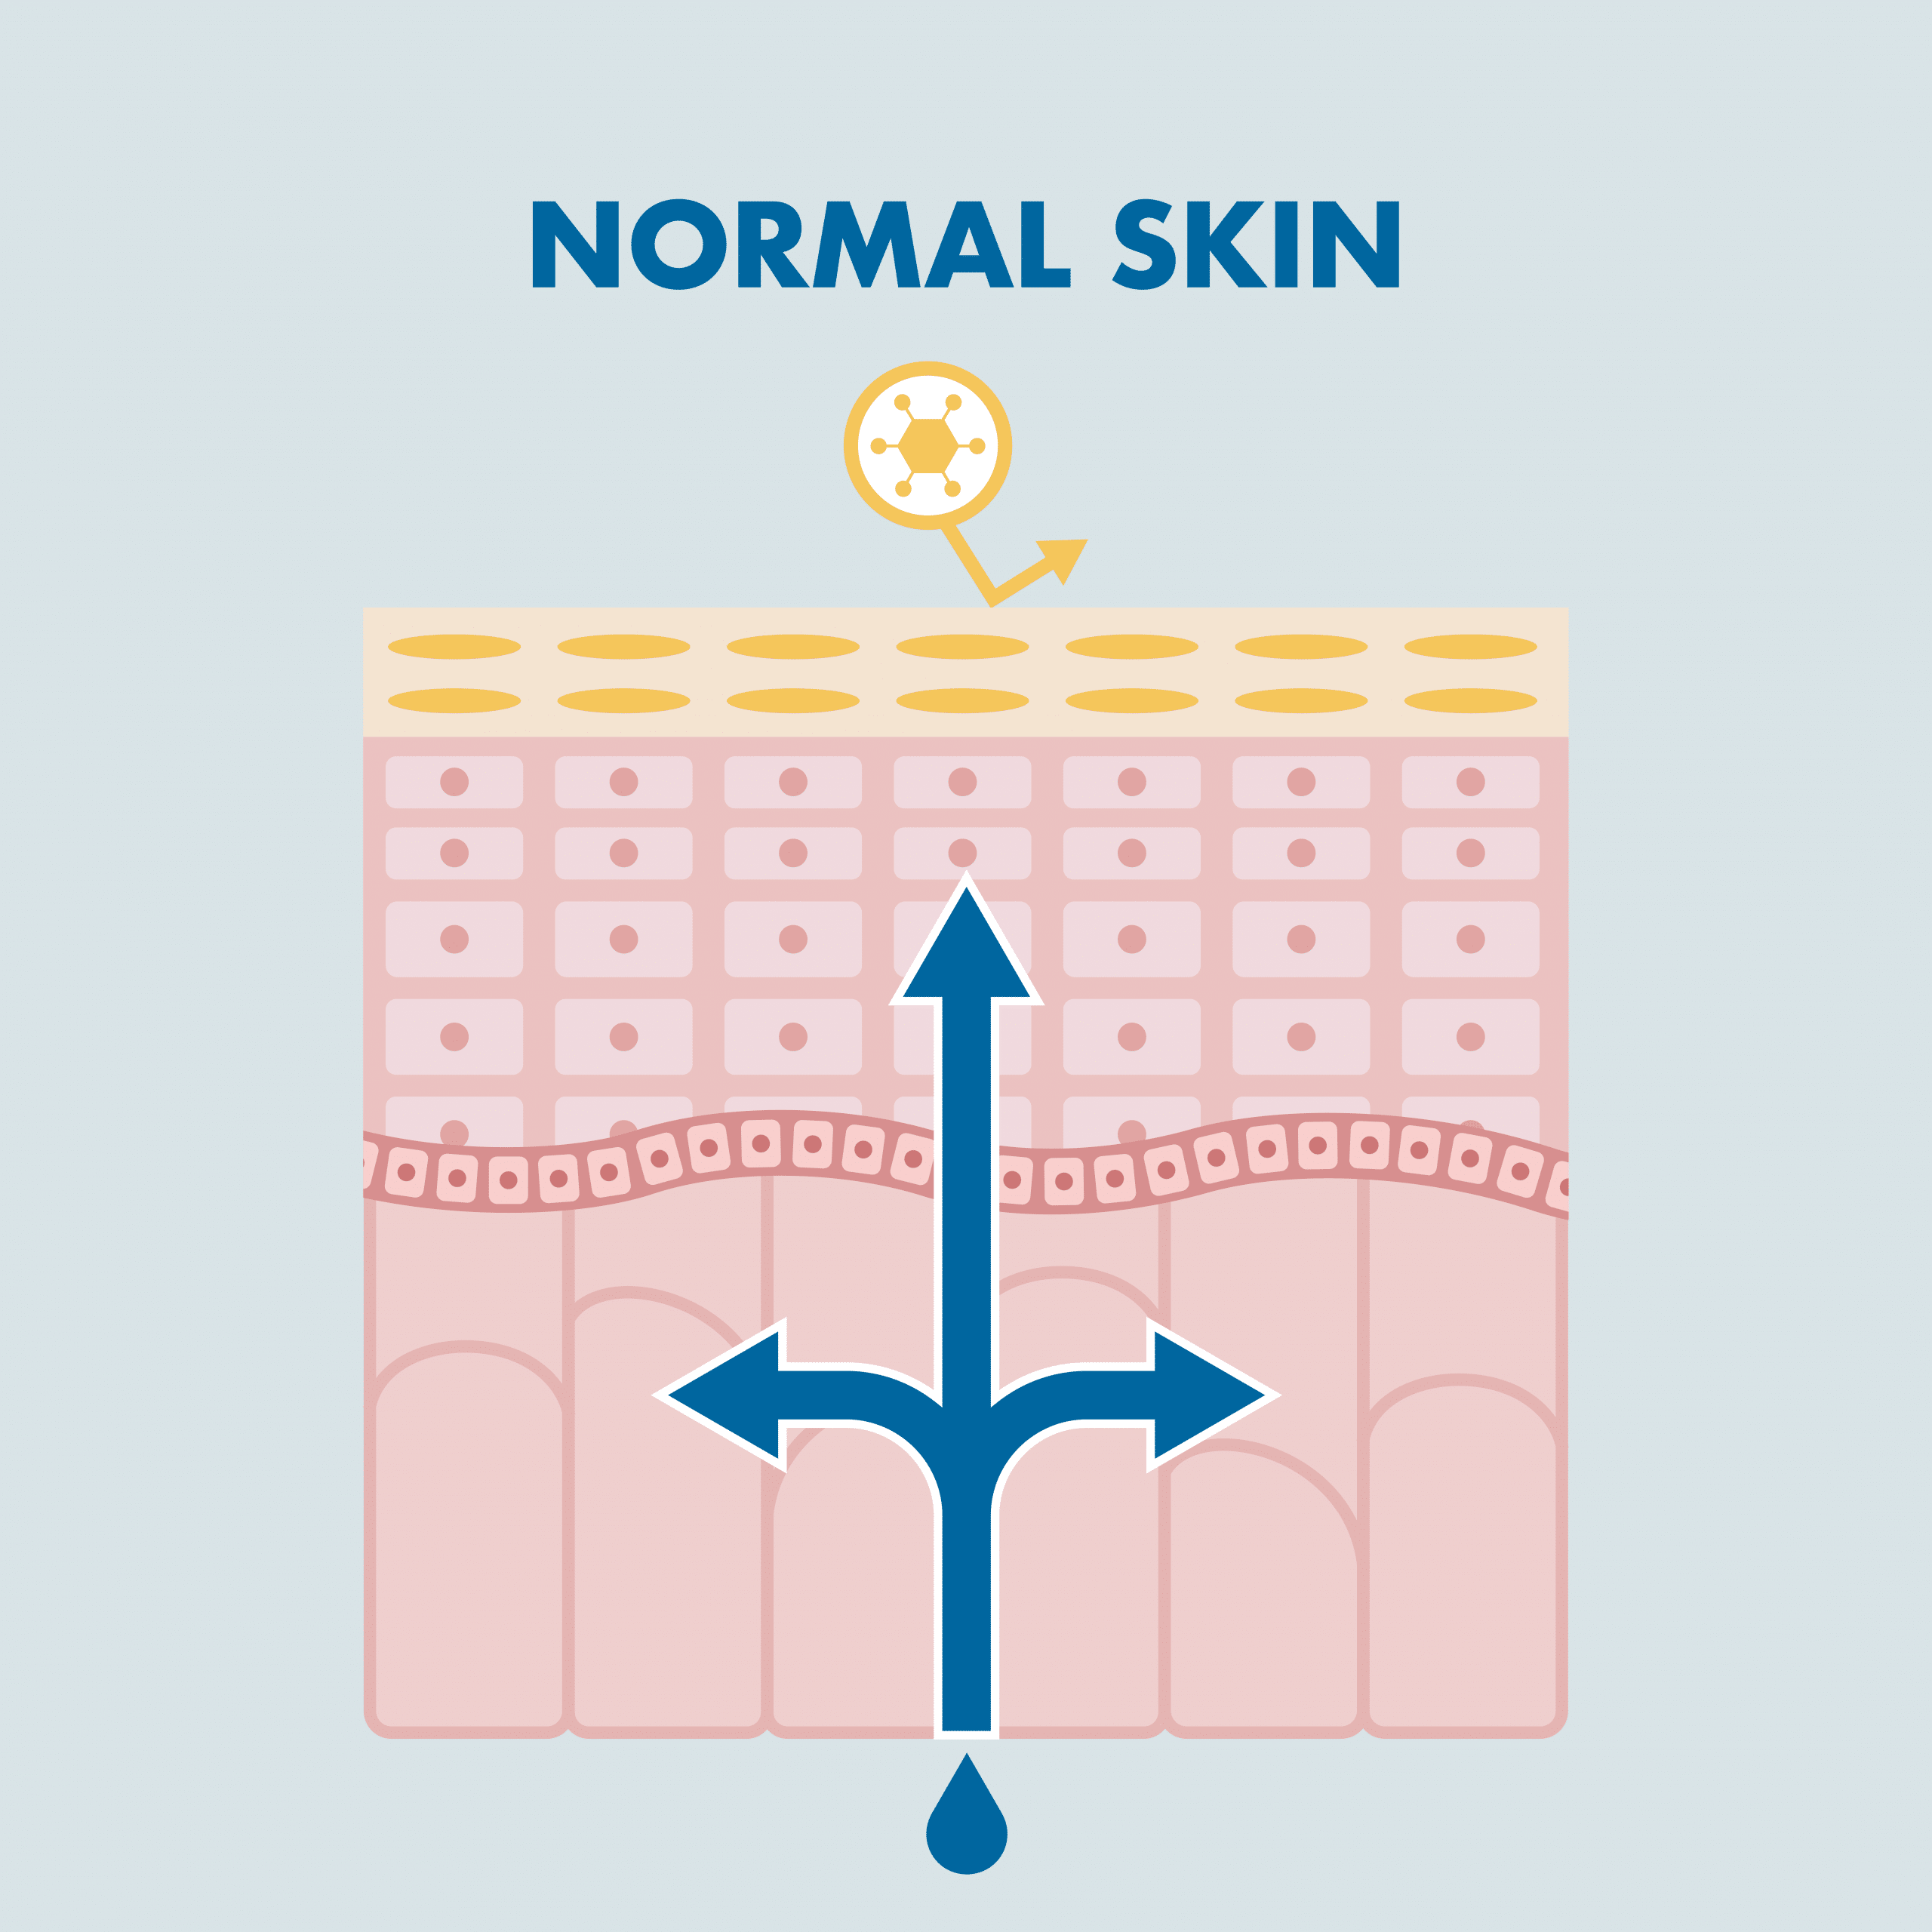 Normal Skin of the skin barrier